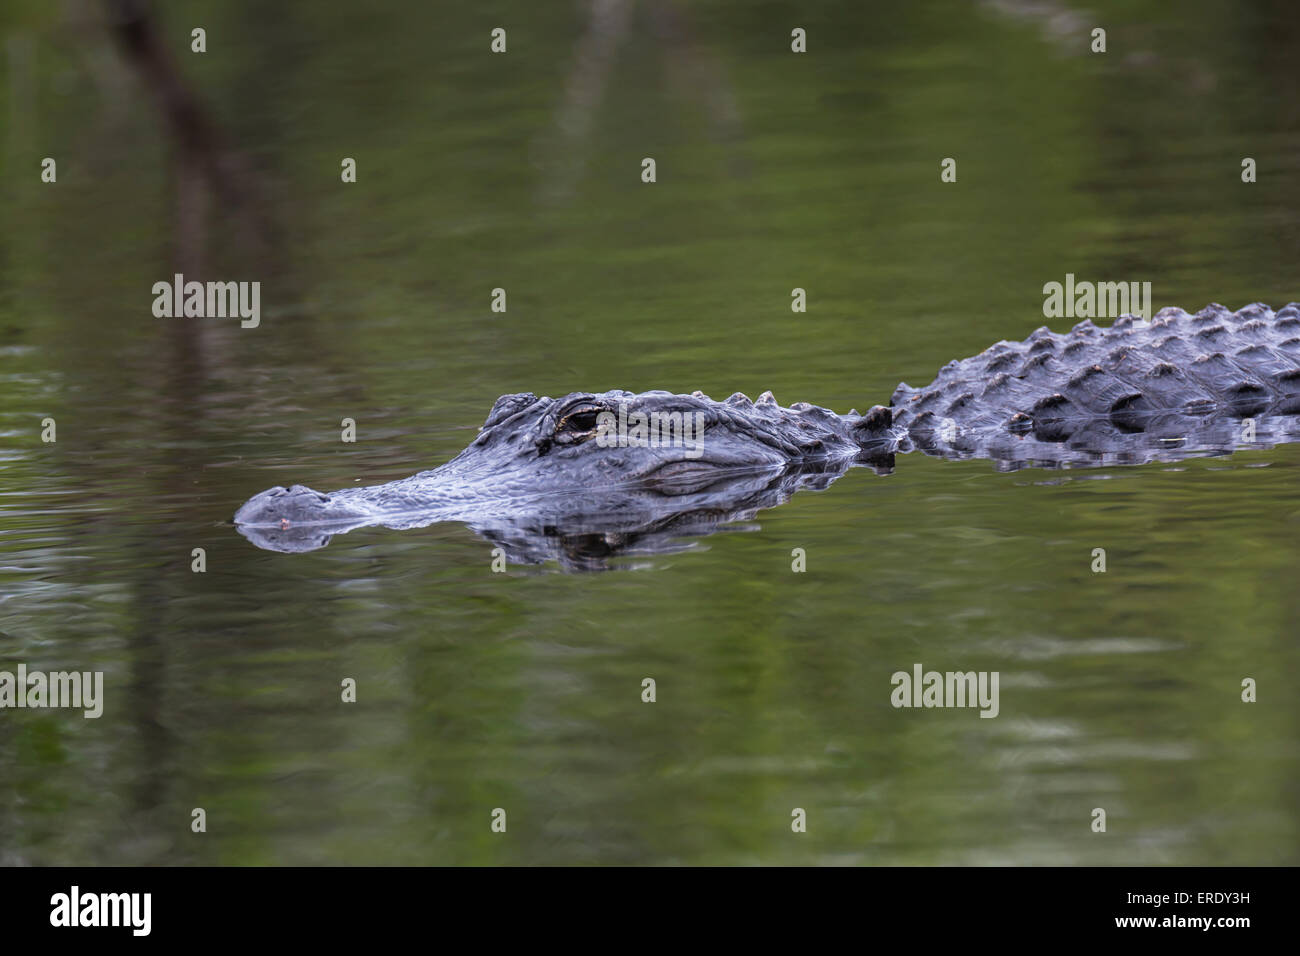 American Alligator (Alligator mississippiensis) swimming in water, Everglades National Park, Florida, USA Stock Photo